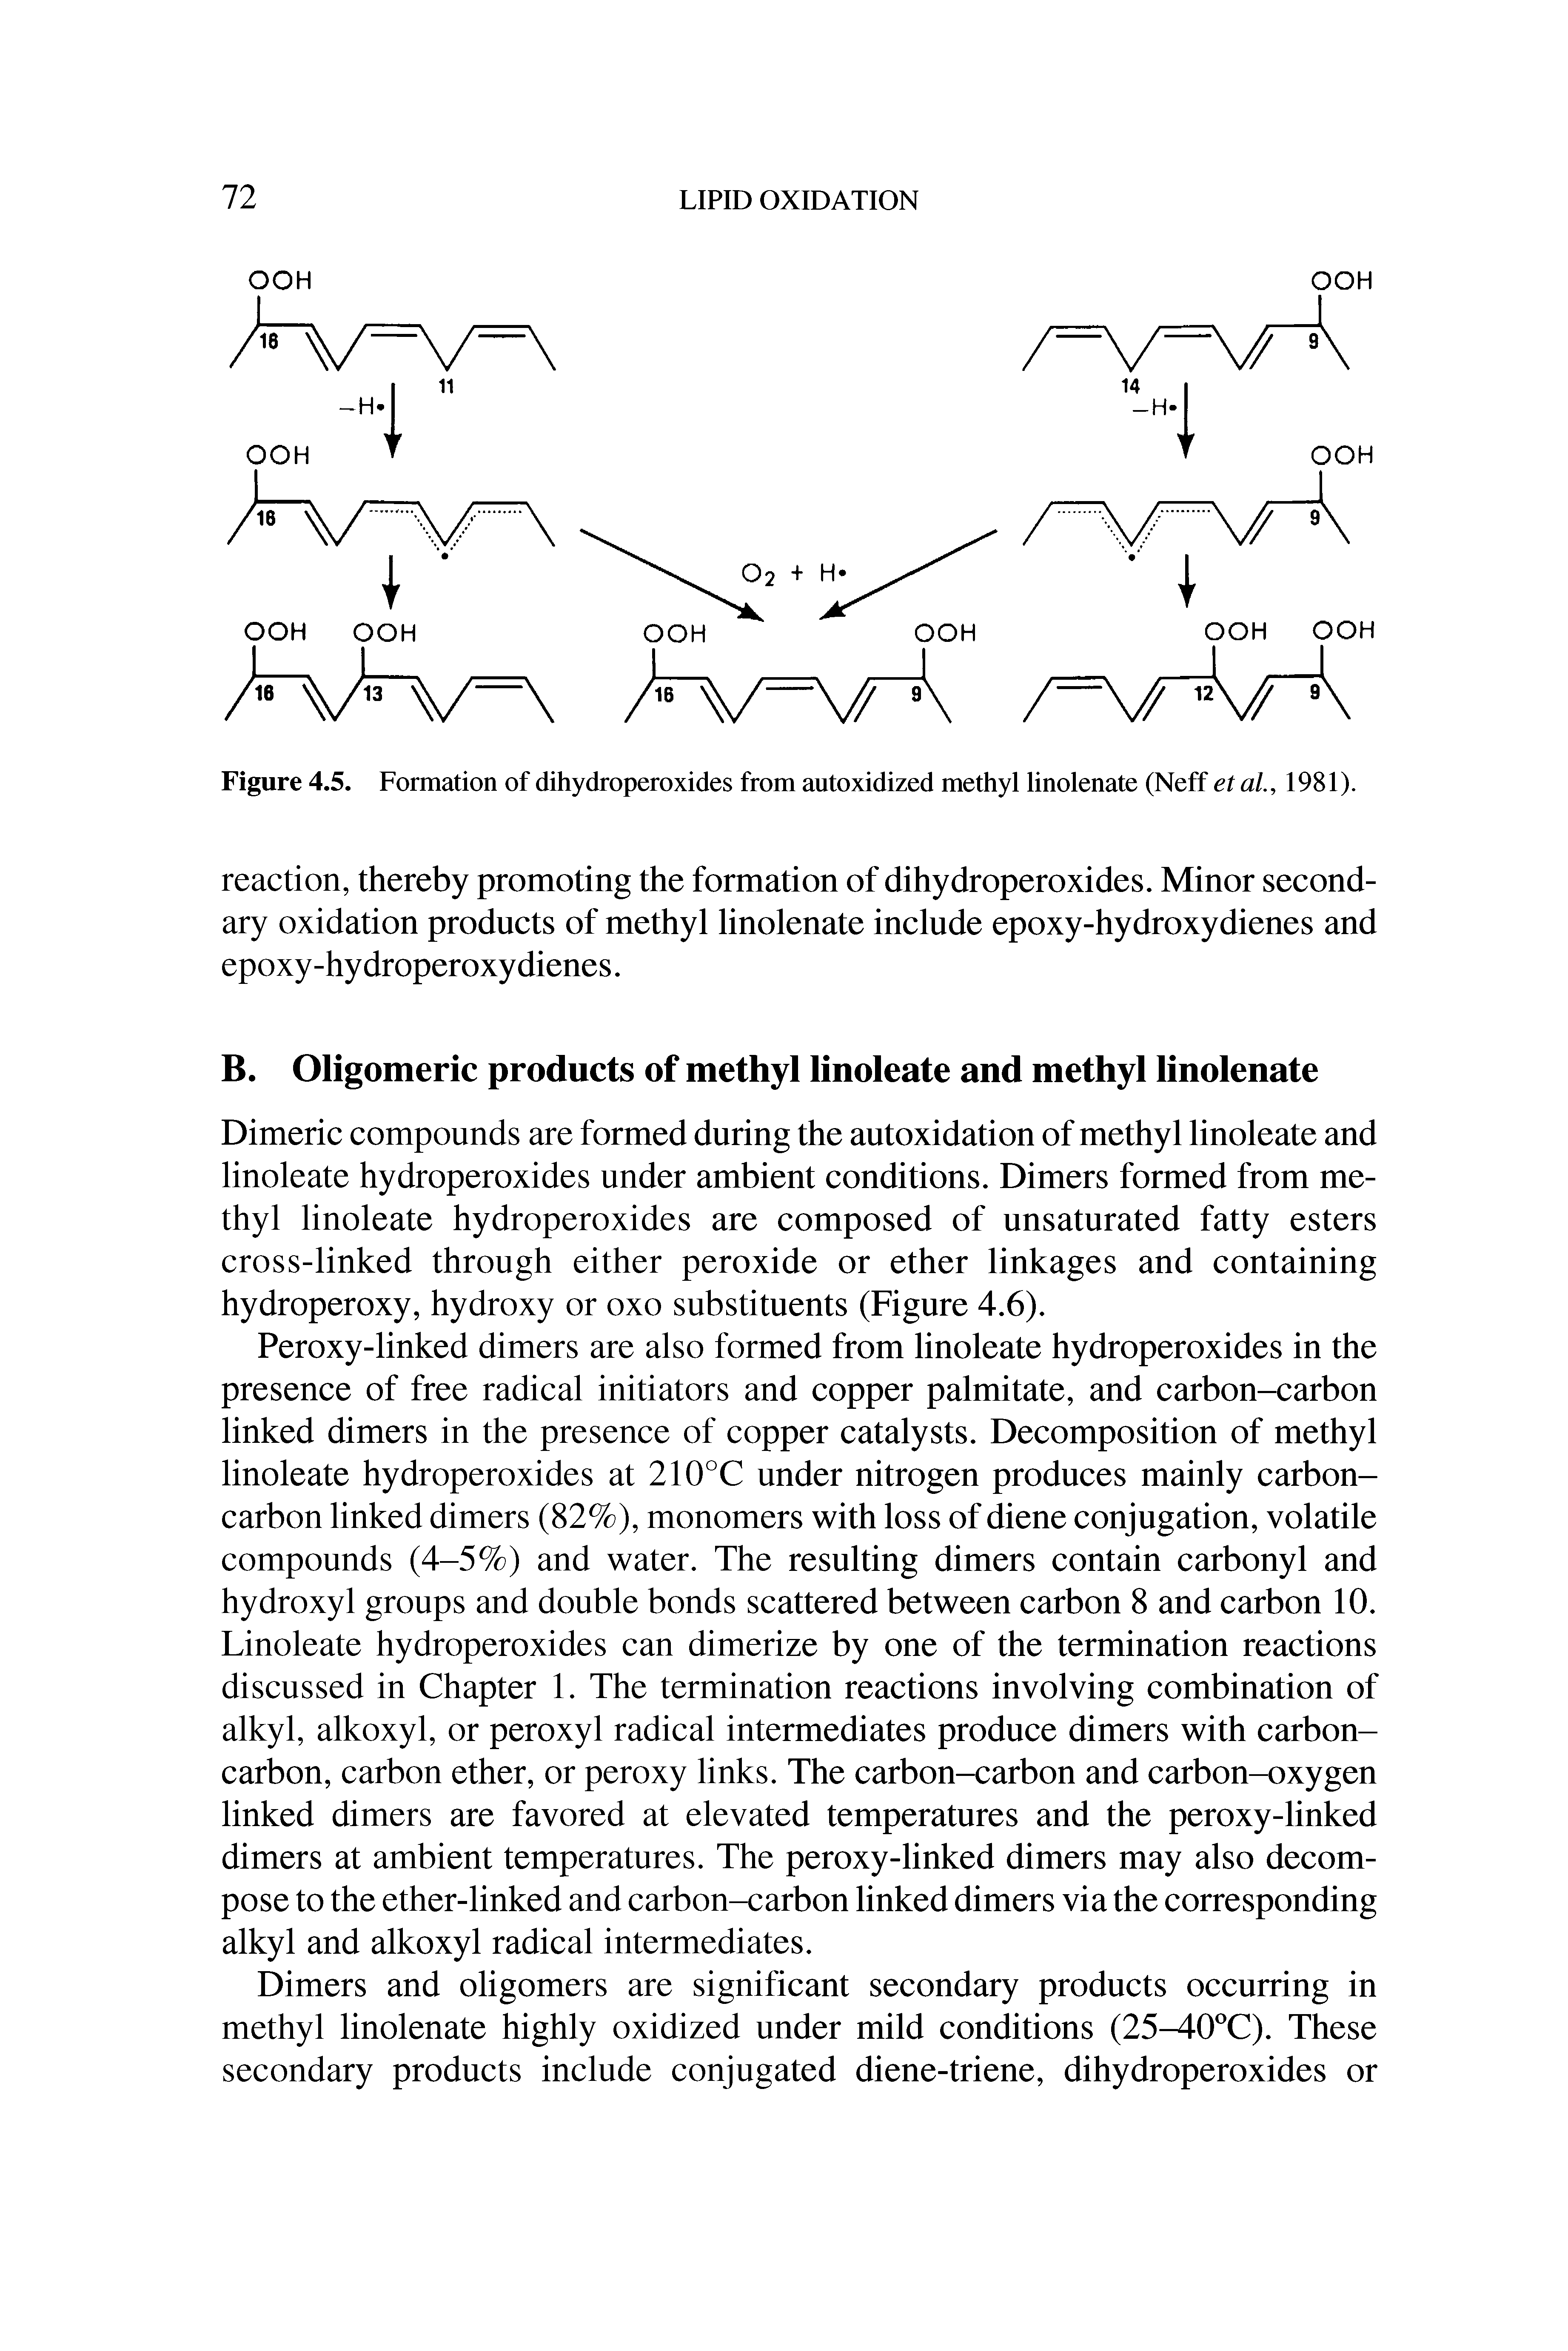 Figure 4.5. Formation of dihydroperoxides from autoxidized methyl linolenate (Neff et al., 1981).